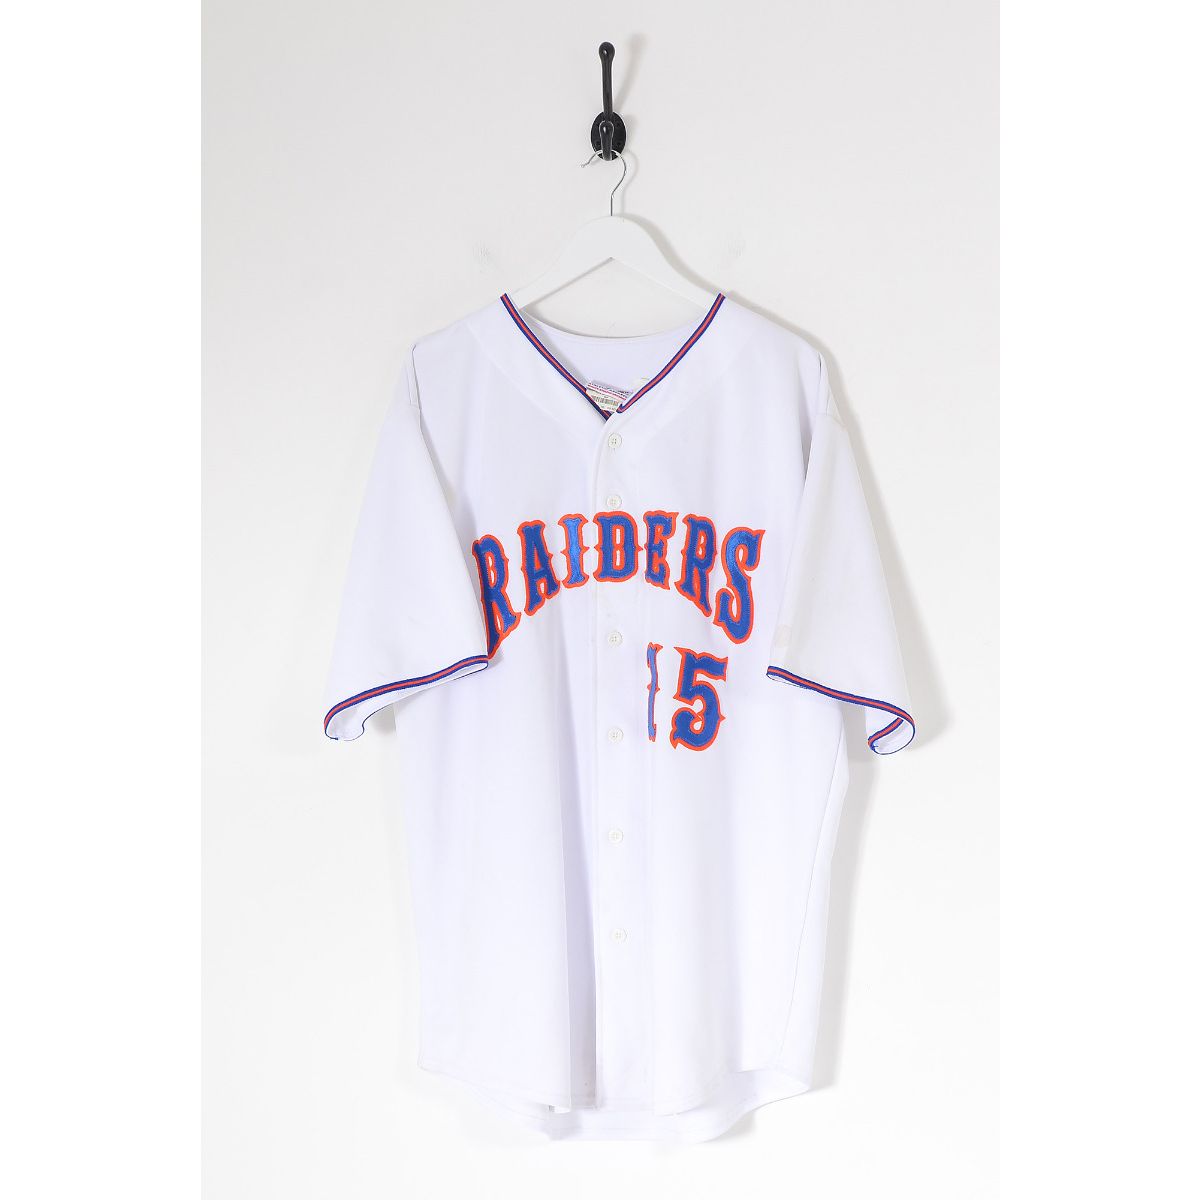 vintage raiders baseball jersey